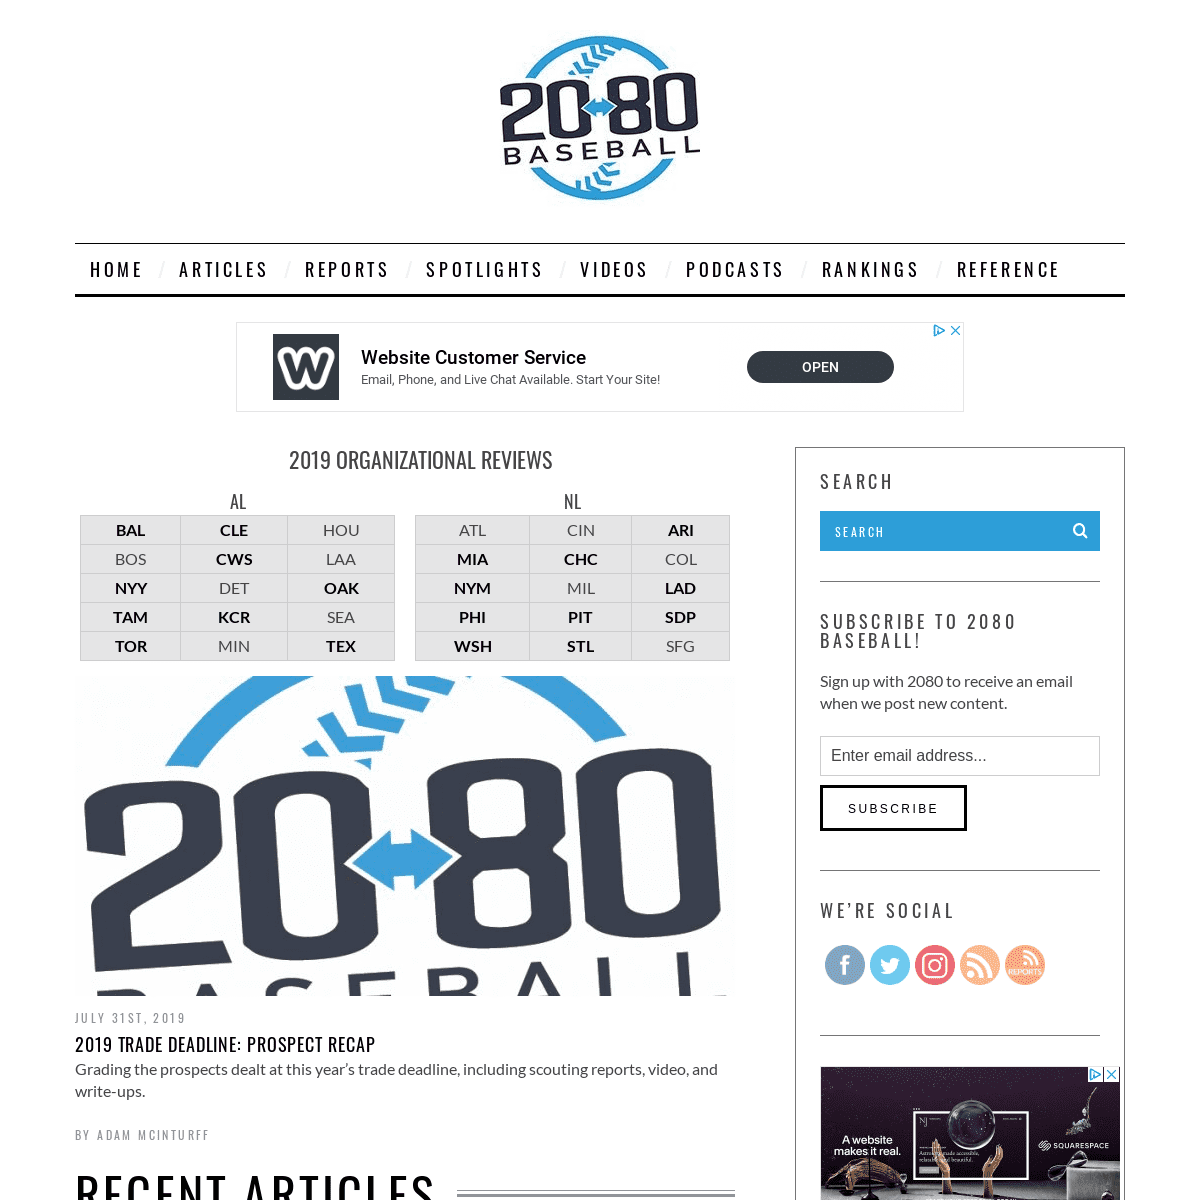 A complete backup of 2080baseball.com